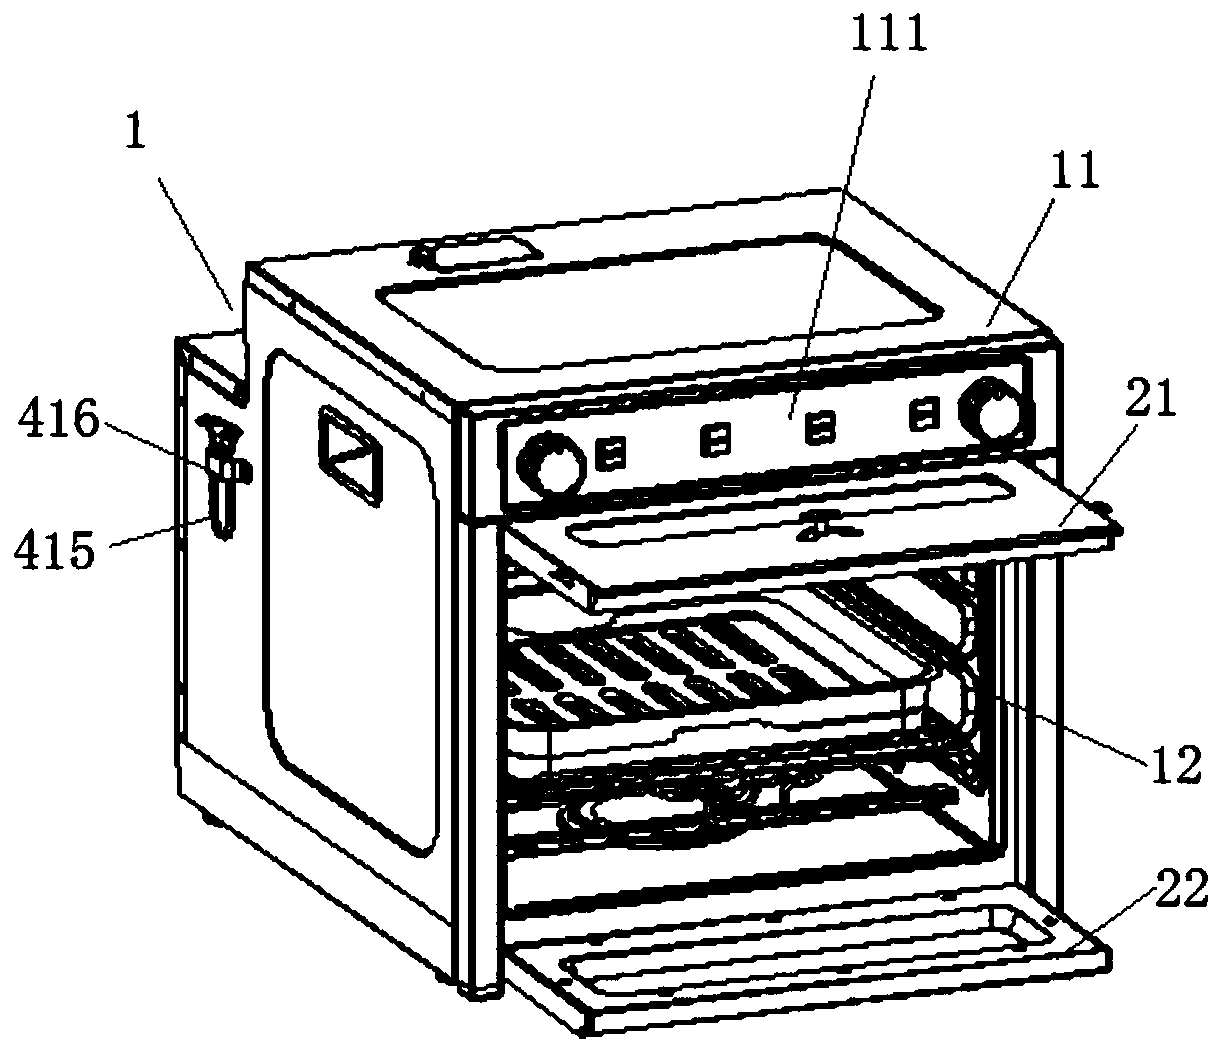 Novel electric oven